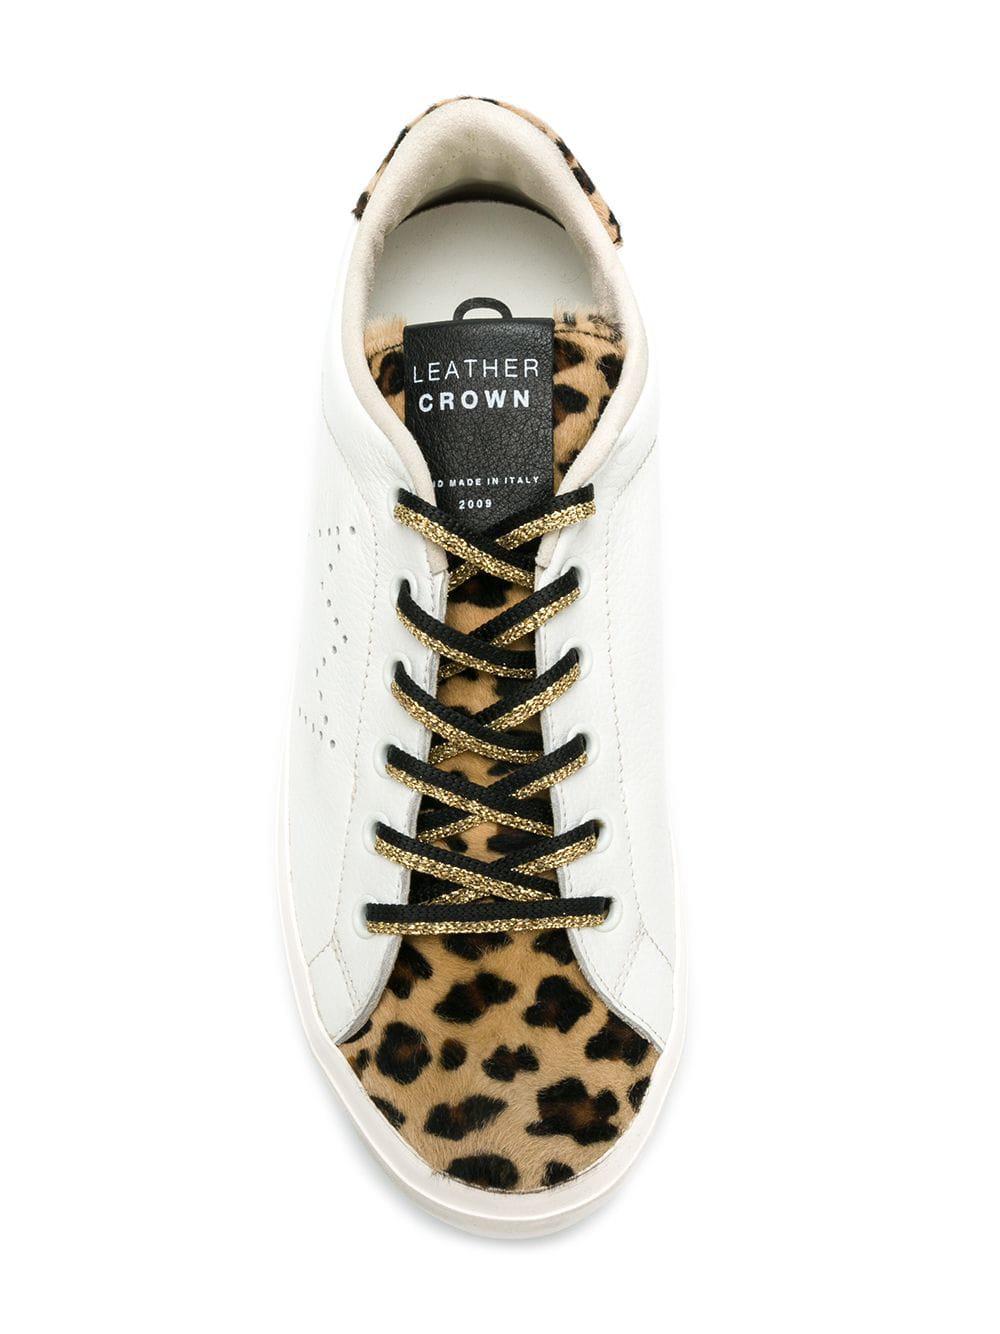 white leopard sneakers